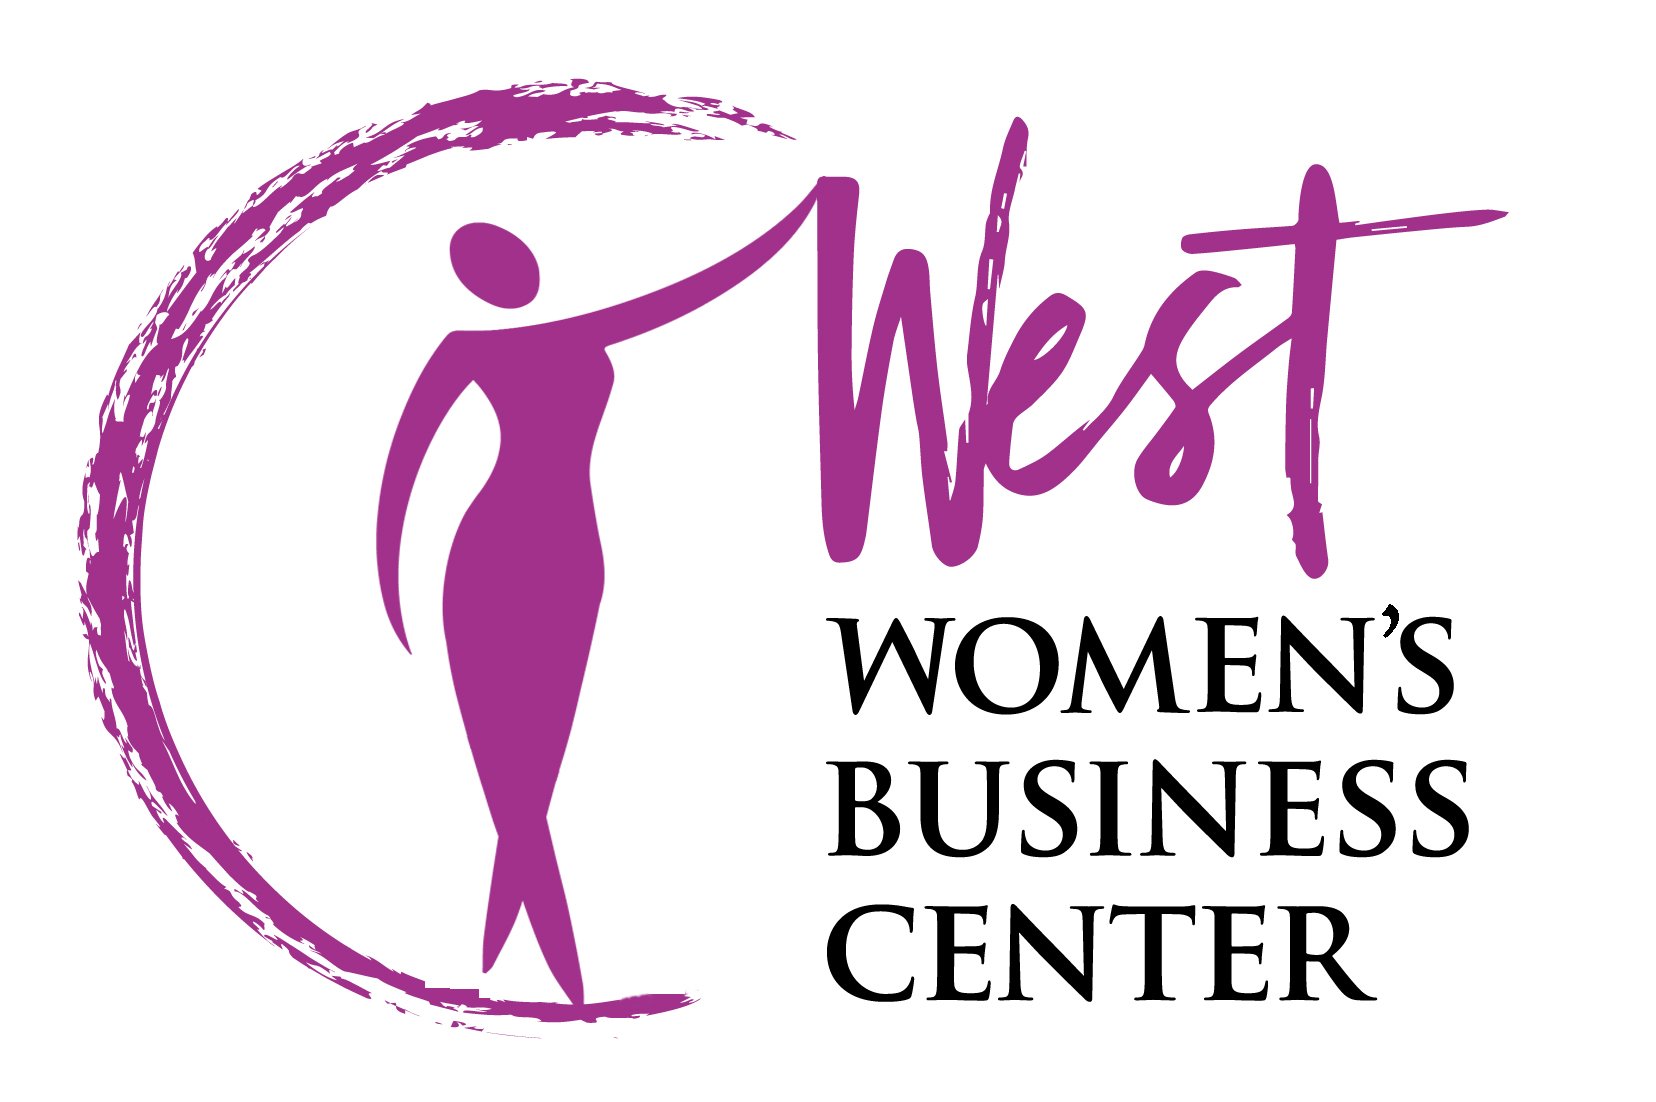 West Buisness Development Center - Women's Business Center (Copy)